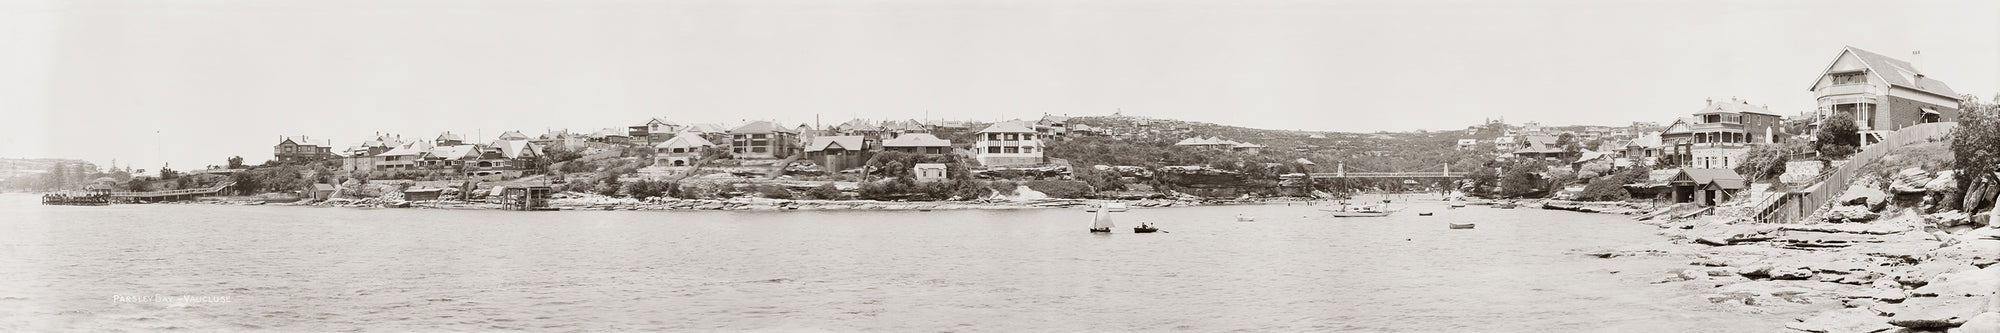 Parsley Bay, Vaucluse NSW Australia c.1920